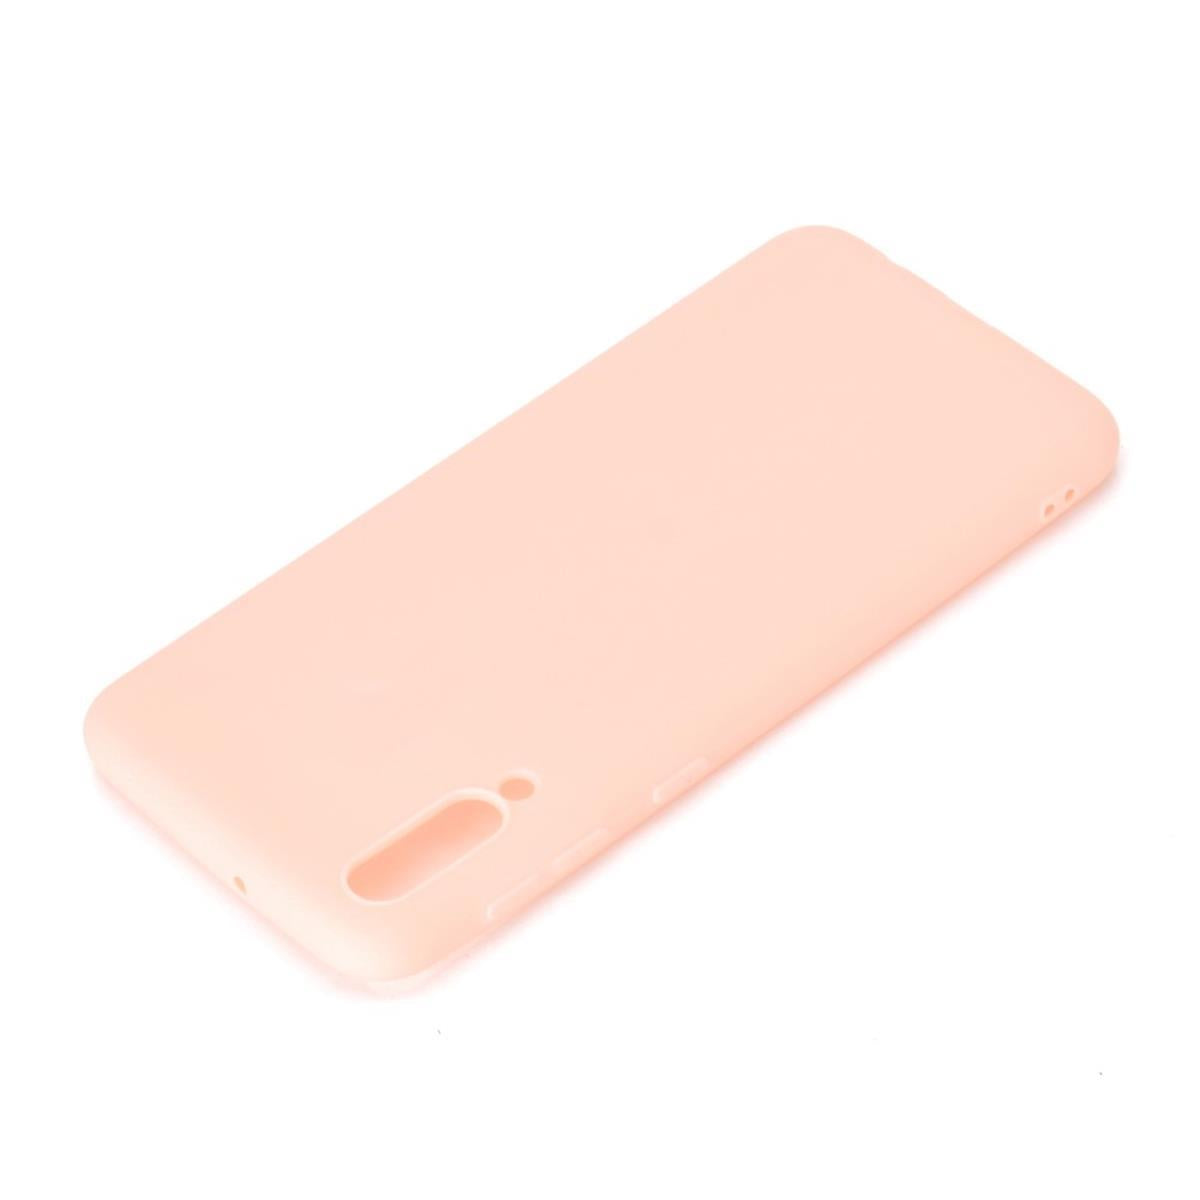 Hülle für Samsung Galaxy A70 Handyhülle Silikon Case Schutzhülle Cover matt Rosa